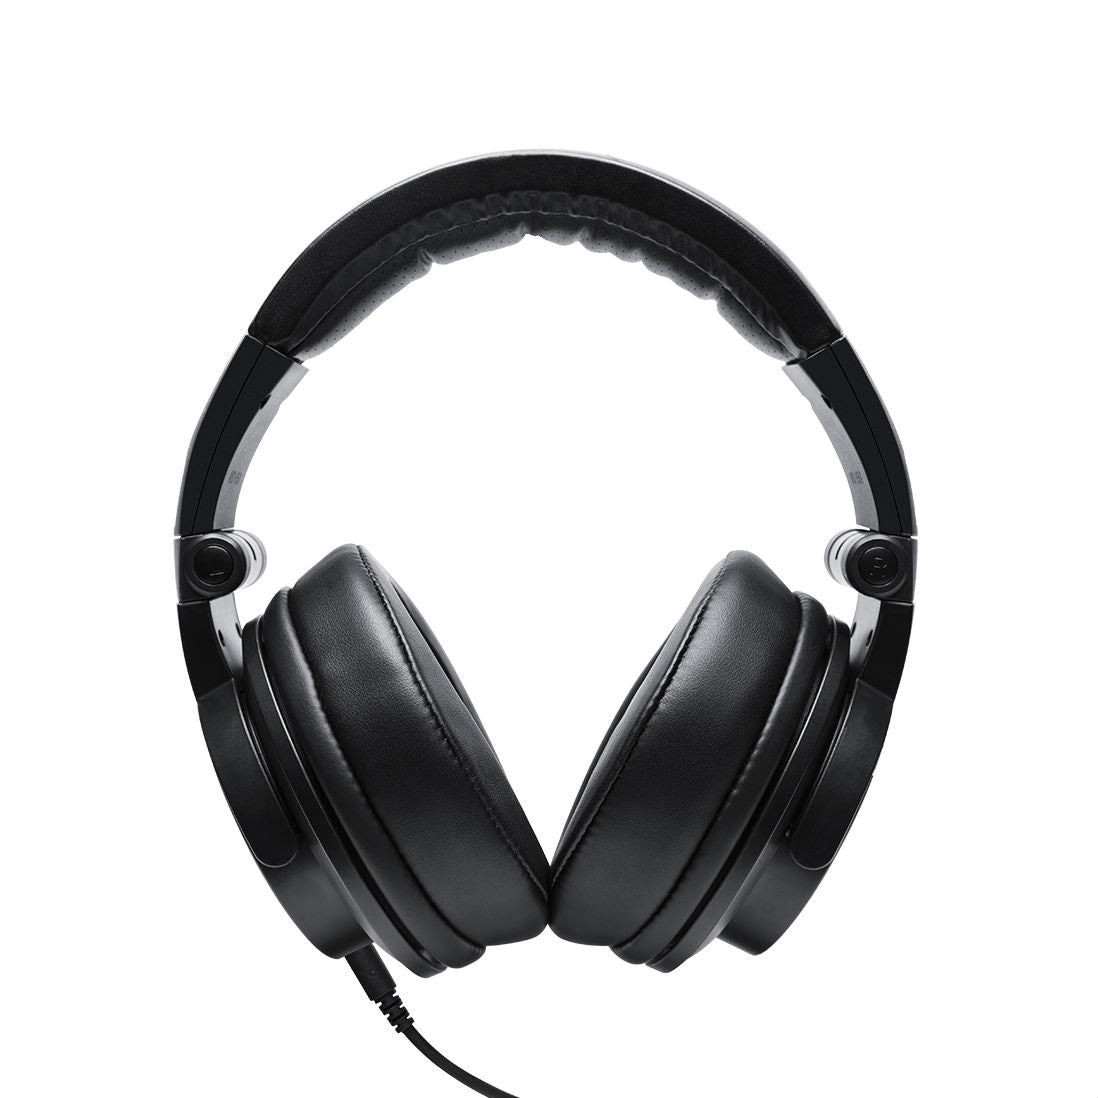 Mackie MC-150 Professional Headphones